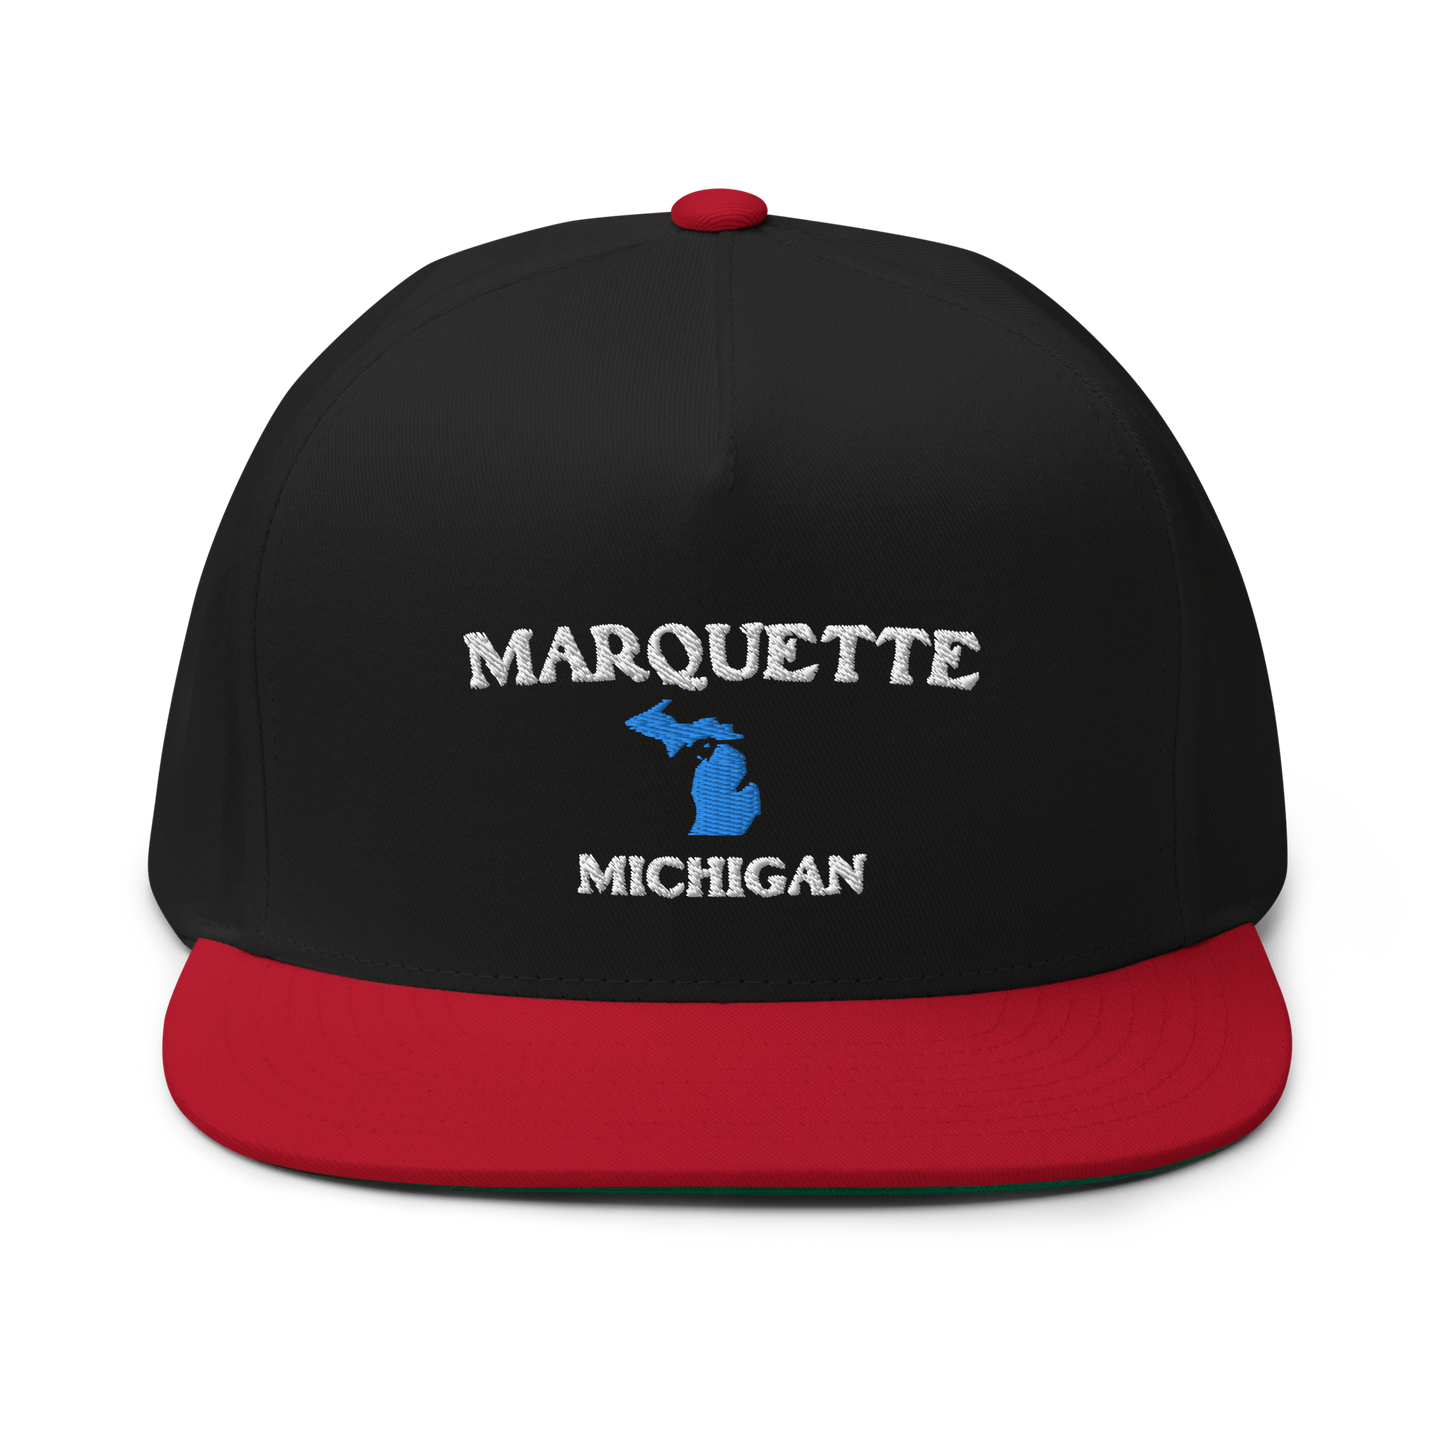 'Marquette Michigan' Flat Bill Snapback (w/ Michigan Outline)